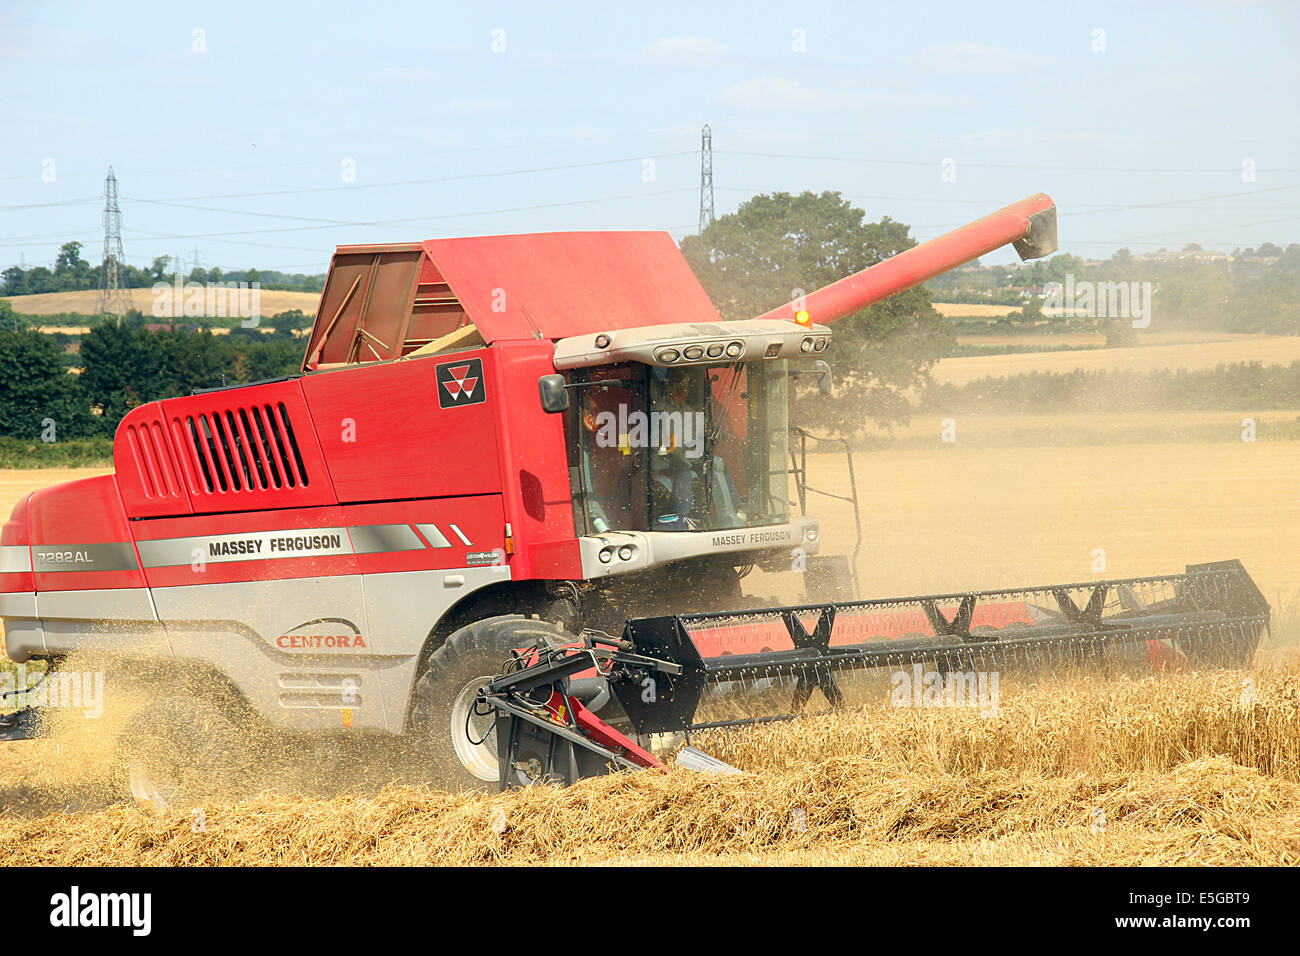 Nuneham Courtenay, Oxfordshire, UK. 30th July, 2014. Wheat harvest at Nuneham Courtenay. Credit: shane leach/ Alamy Live News Stock Photo